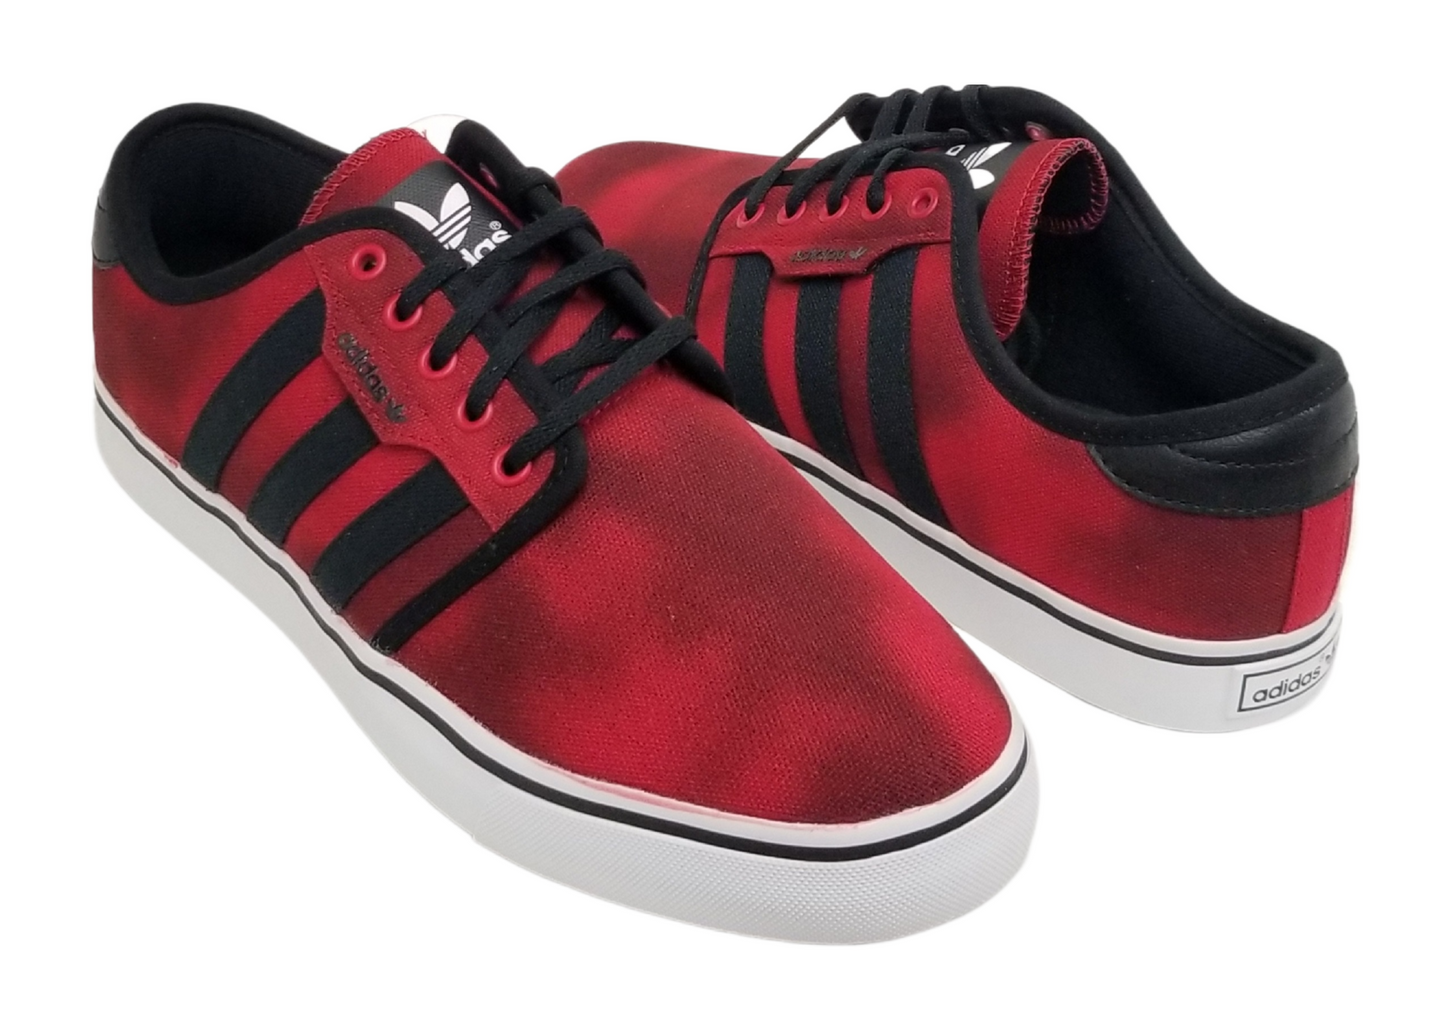 adidas Men Seeley Skateboarding Shoe Power Red / Core Black / White C76312